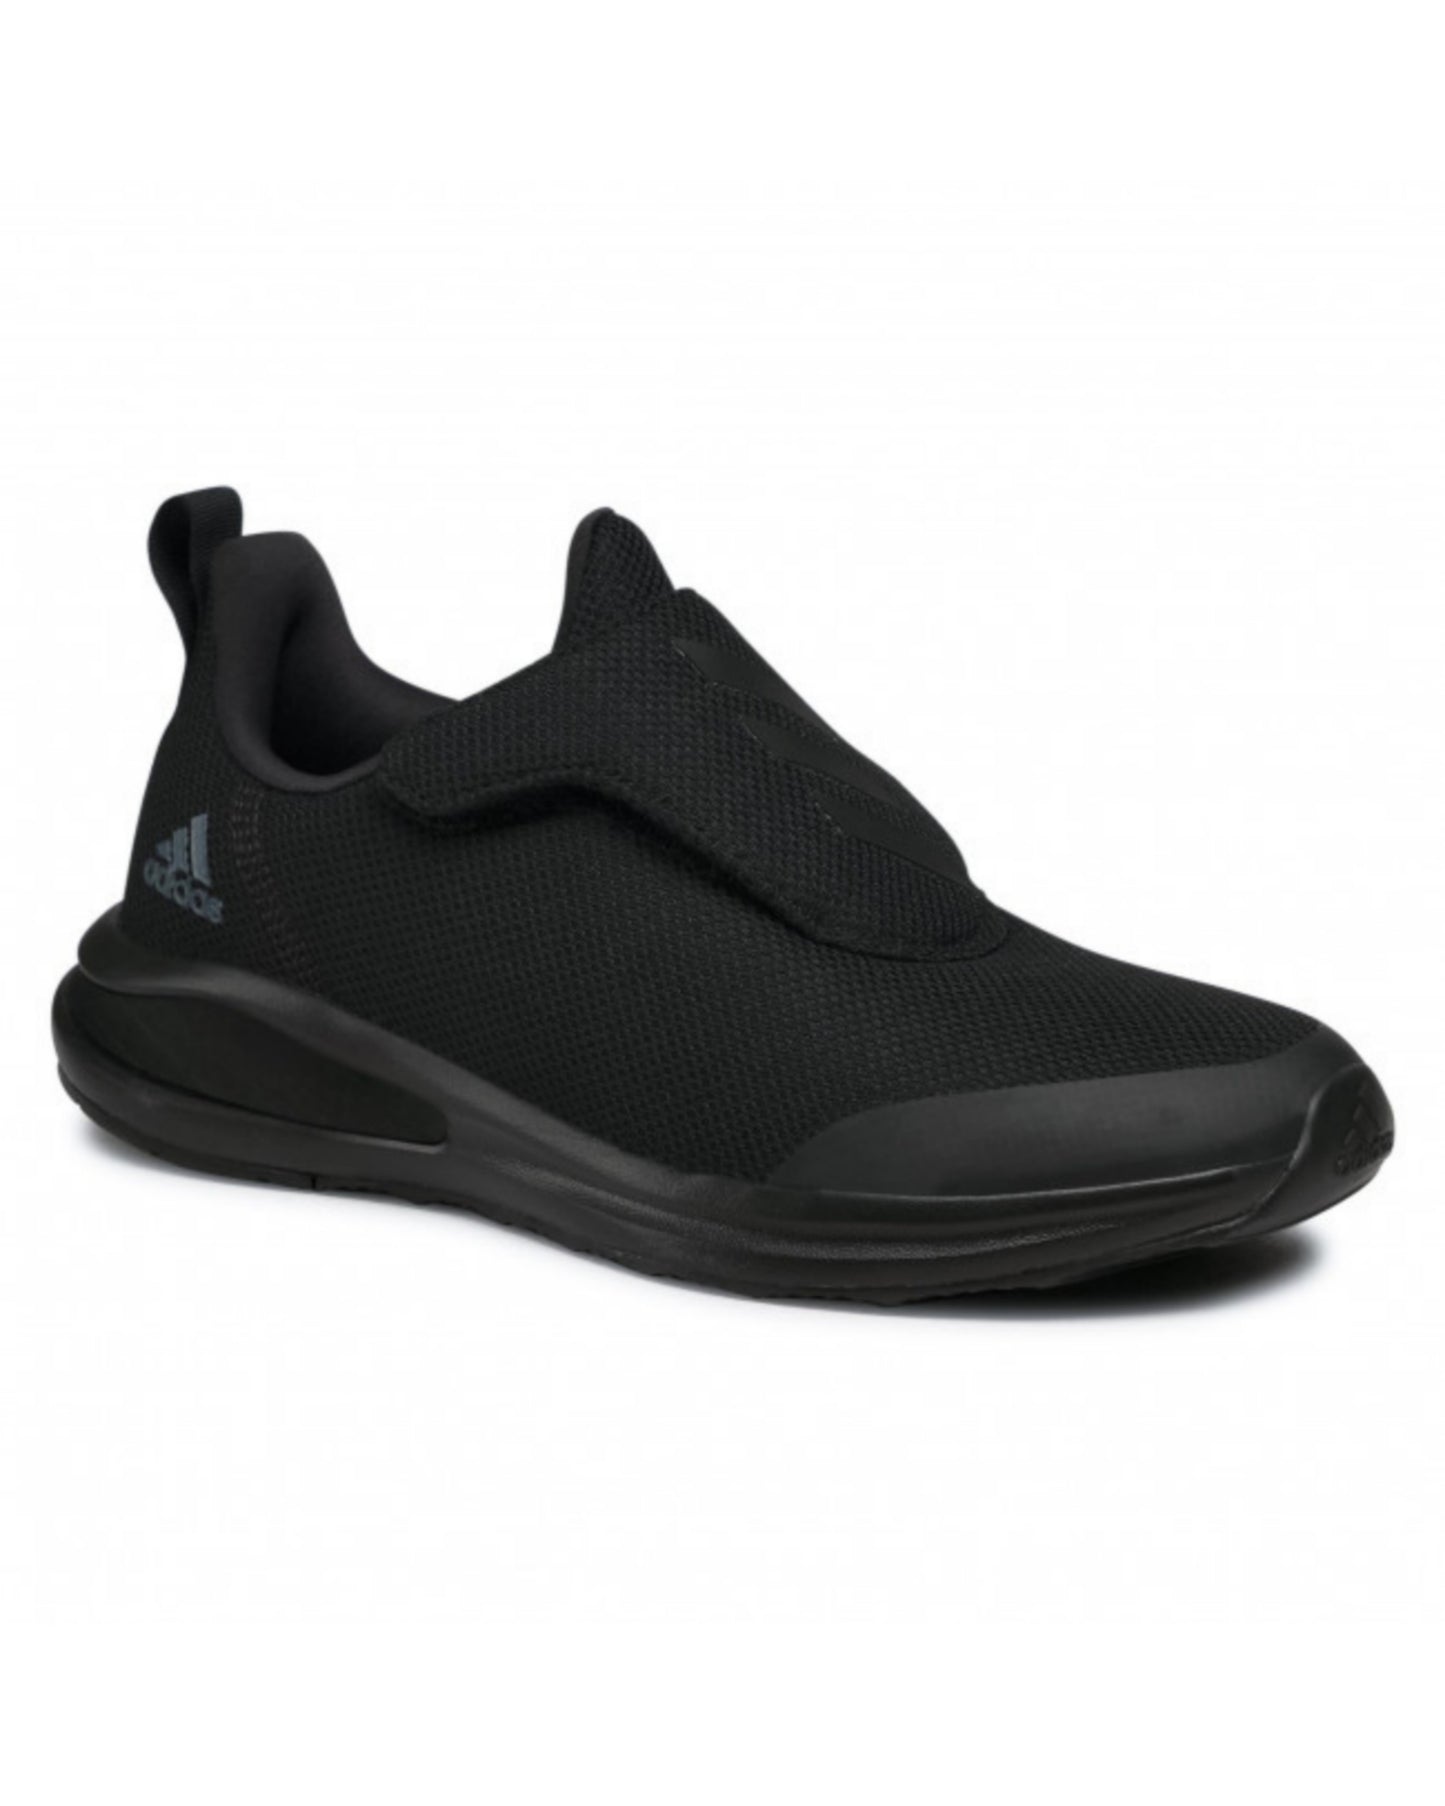 Adidas FortaRun Ac K Sneakers